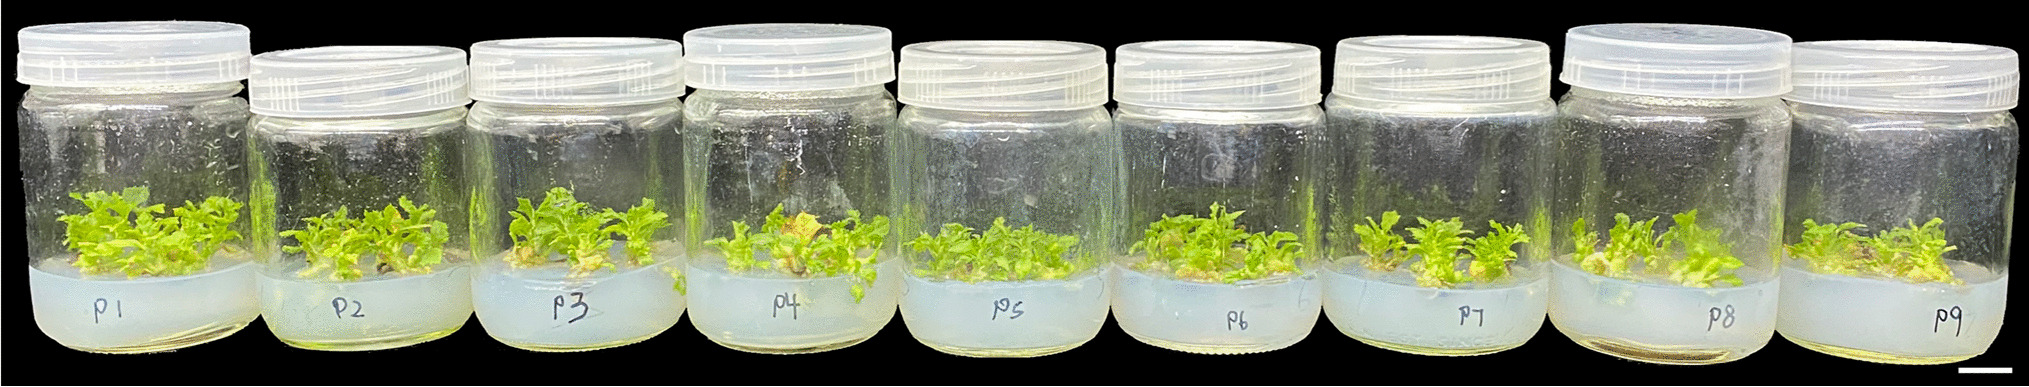 In vitro micropropagation of a novel non-flowering radiation mutant of Platanus × acerifolia Willd.